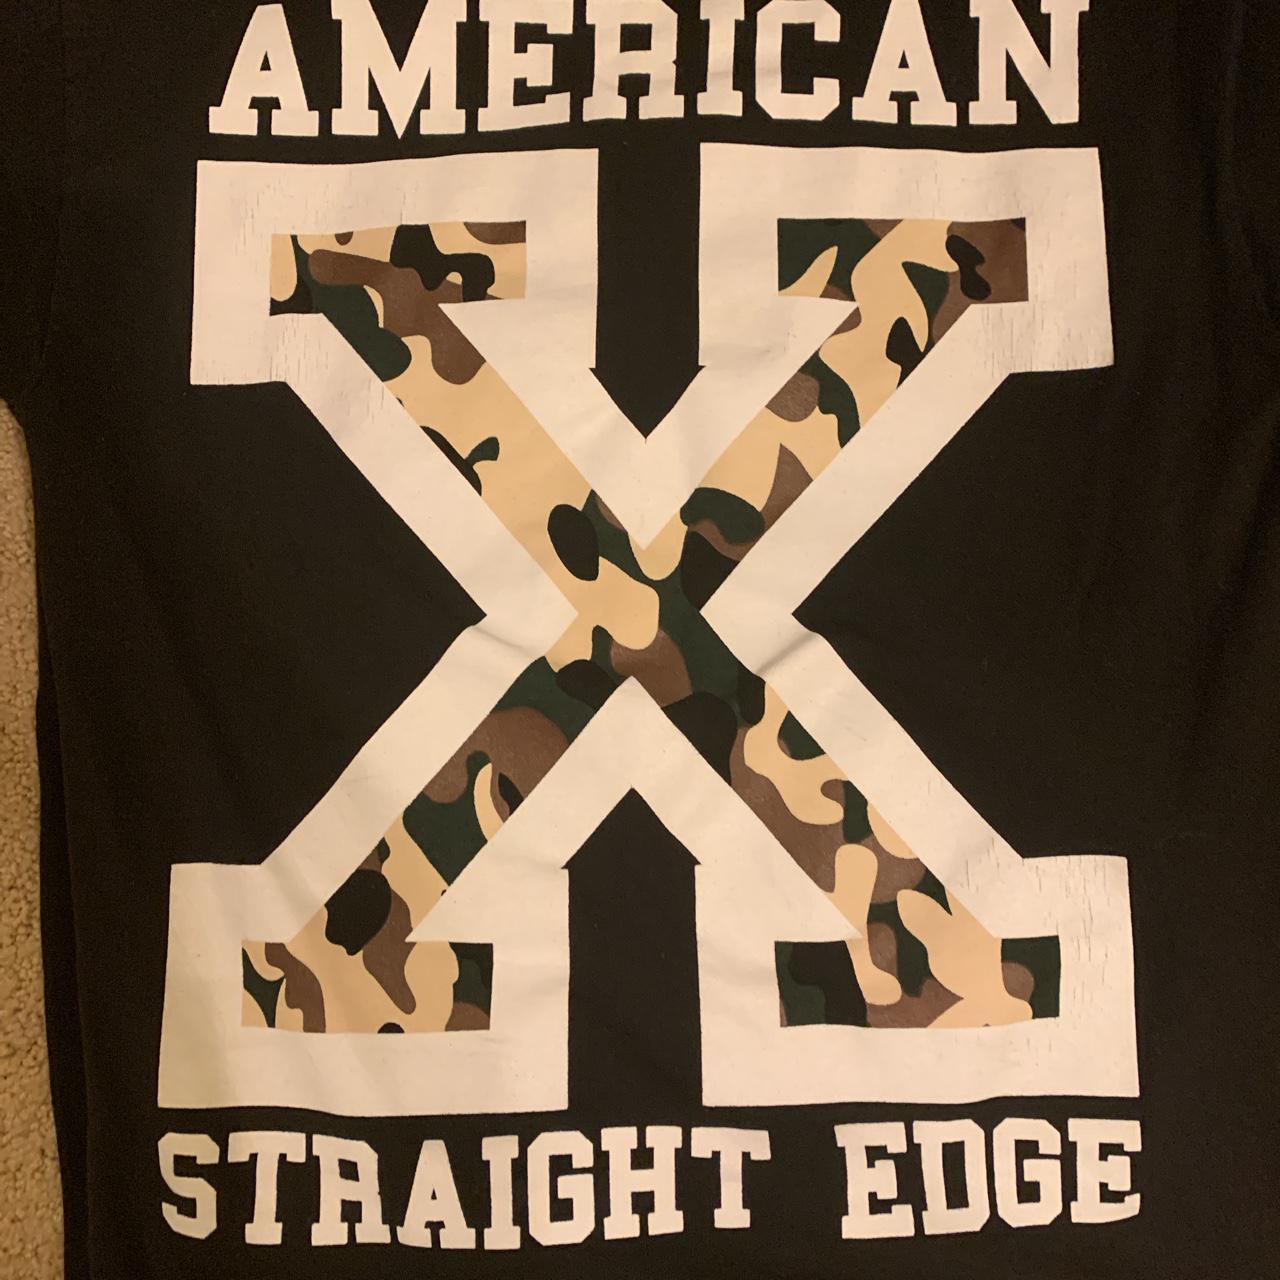 Product Image 1 - American Straight edge shirt
Camo backprint